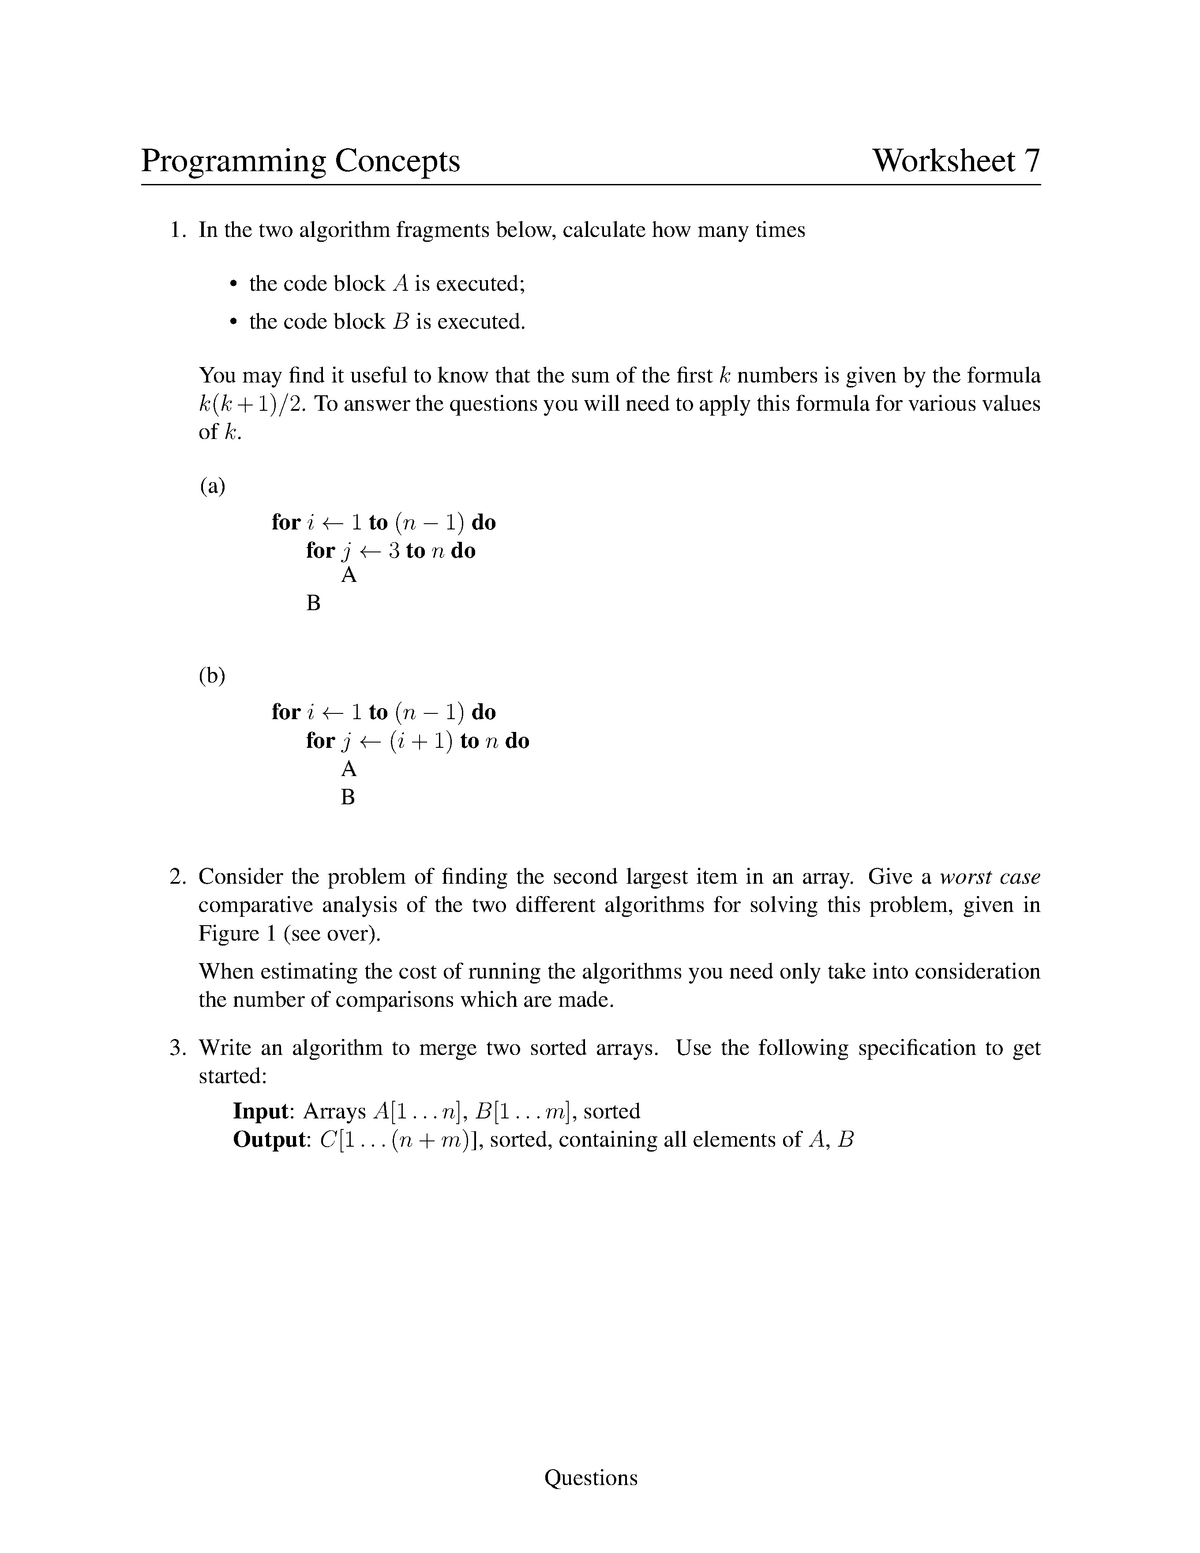 Worksheet 7 - Question set - Programming Concepts - G6007 - Sussex 